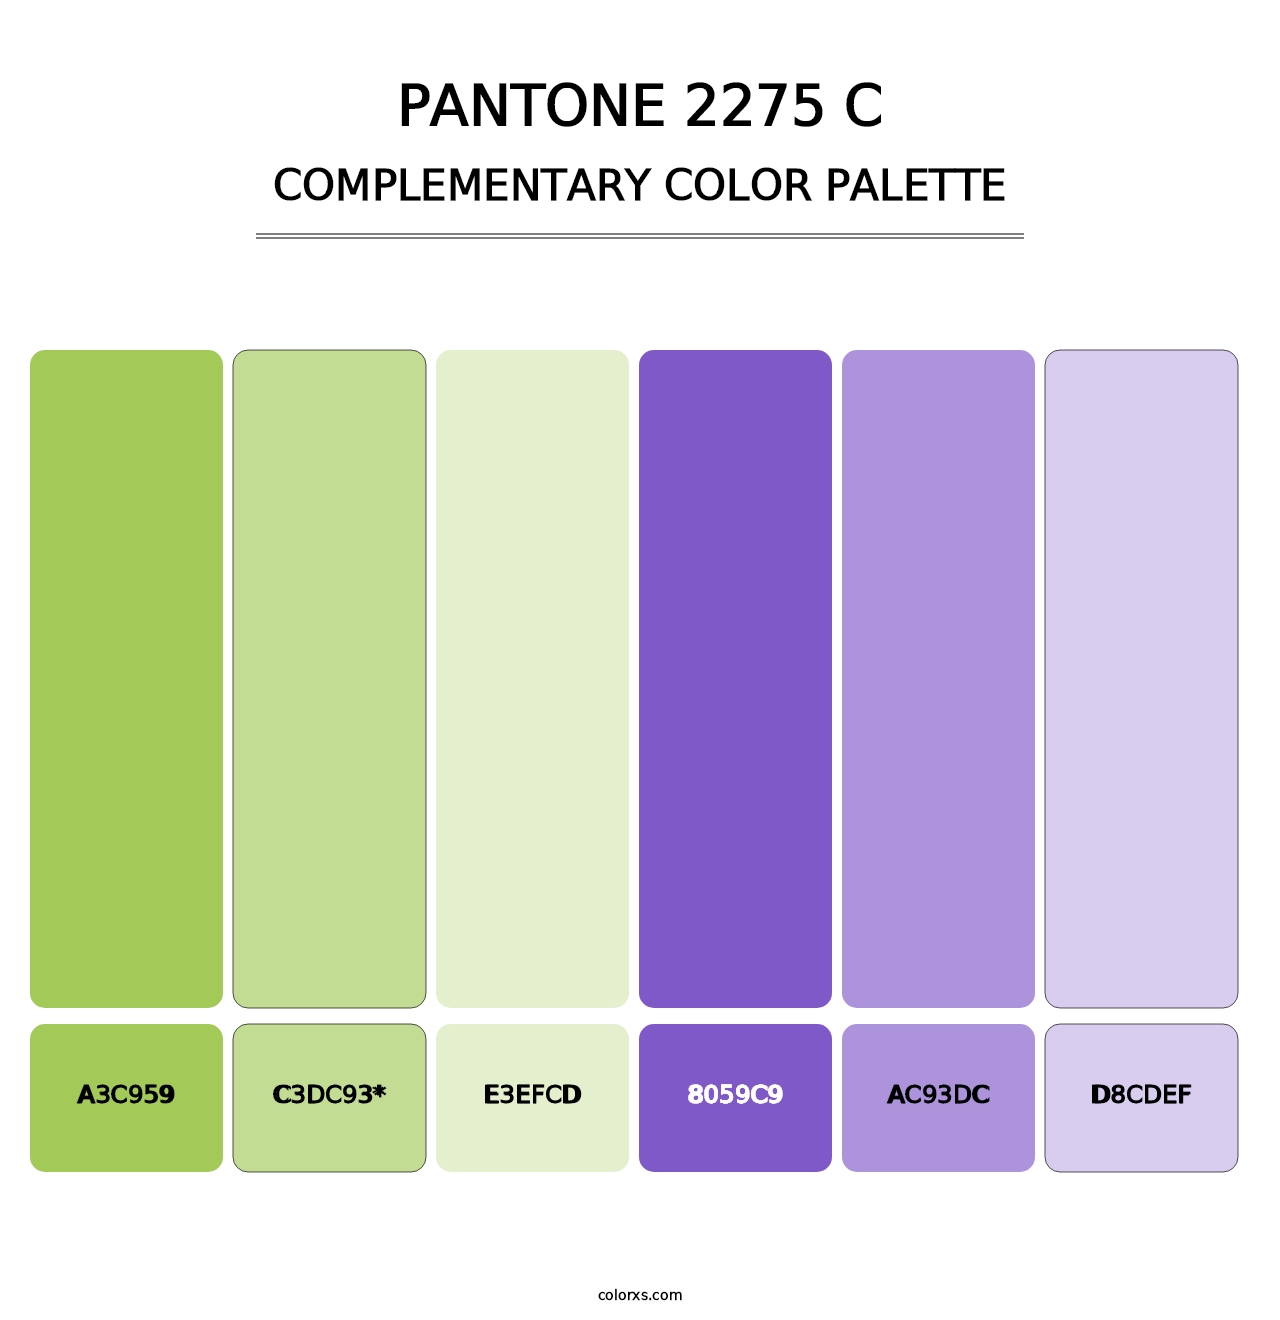 PANTONE 2275 C - Complementary Color Palette